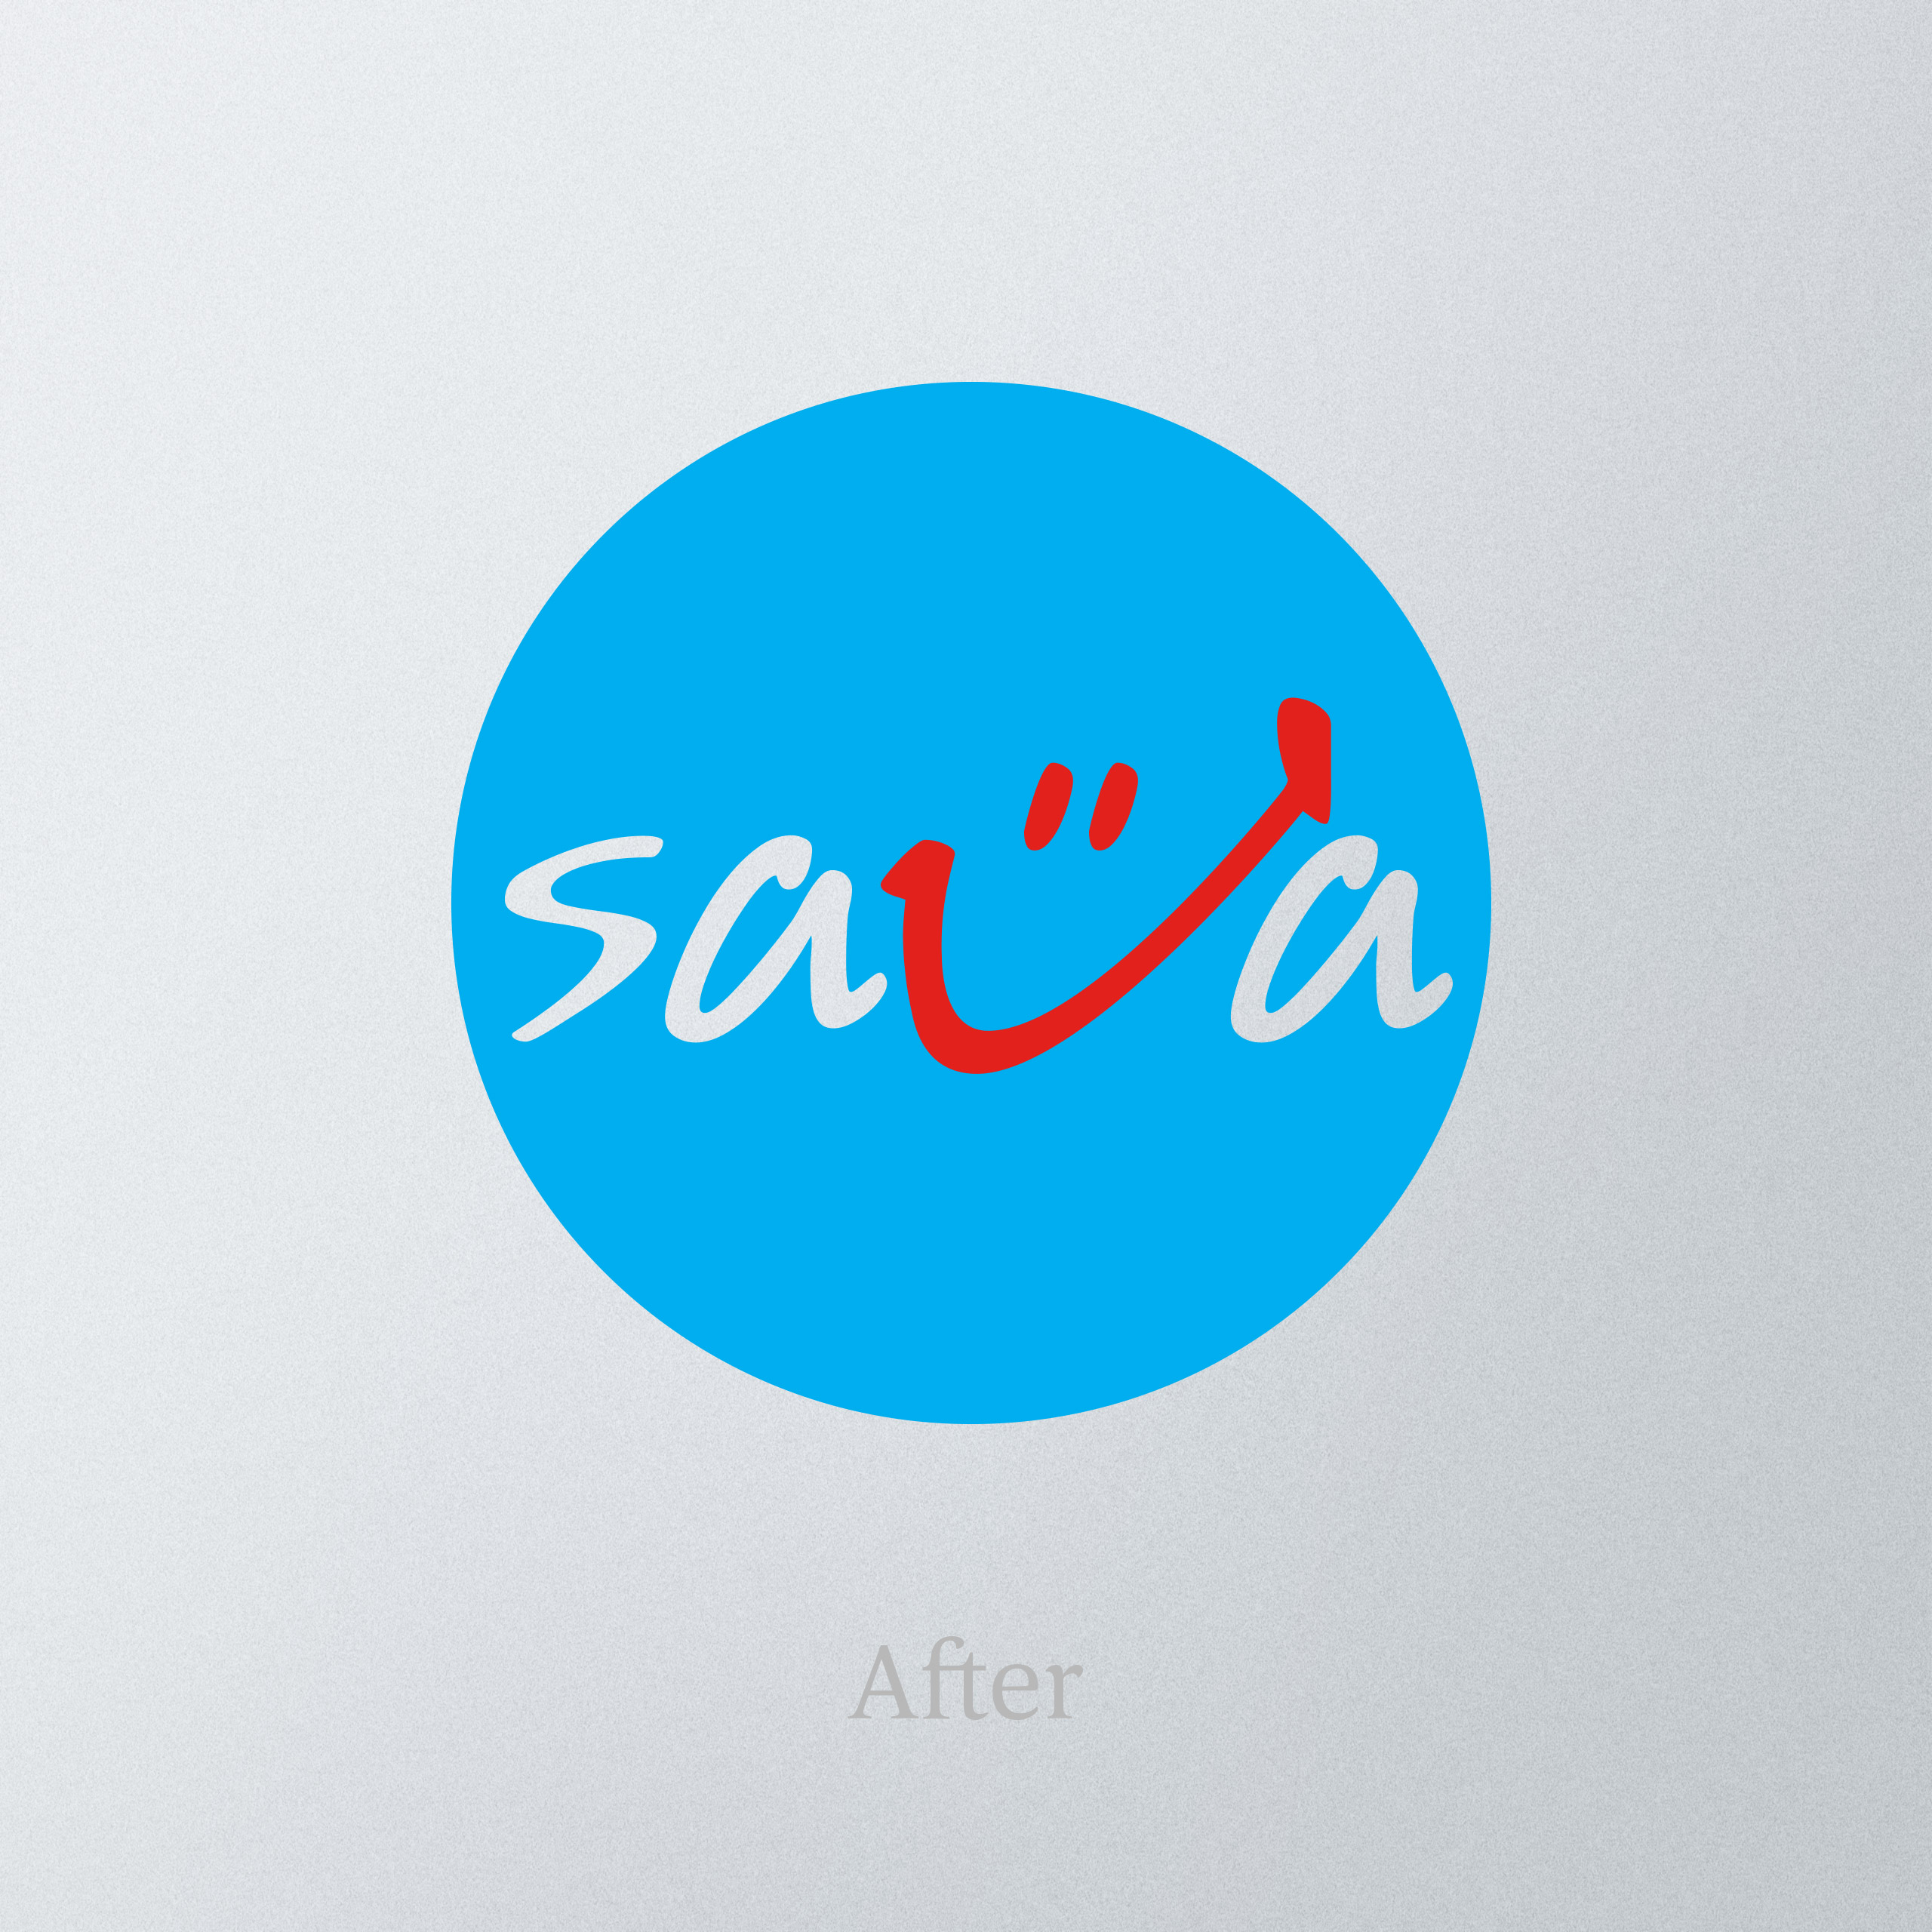 Sava Tours Project Img 12 - Vatra Agency / Founder & CEO Gerton Bejo